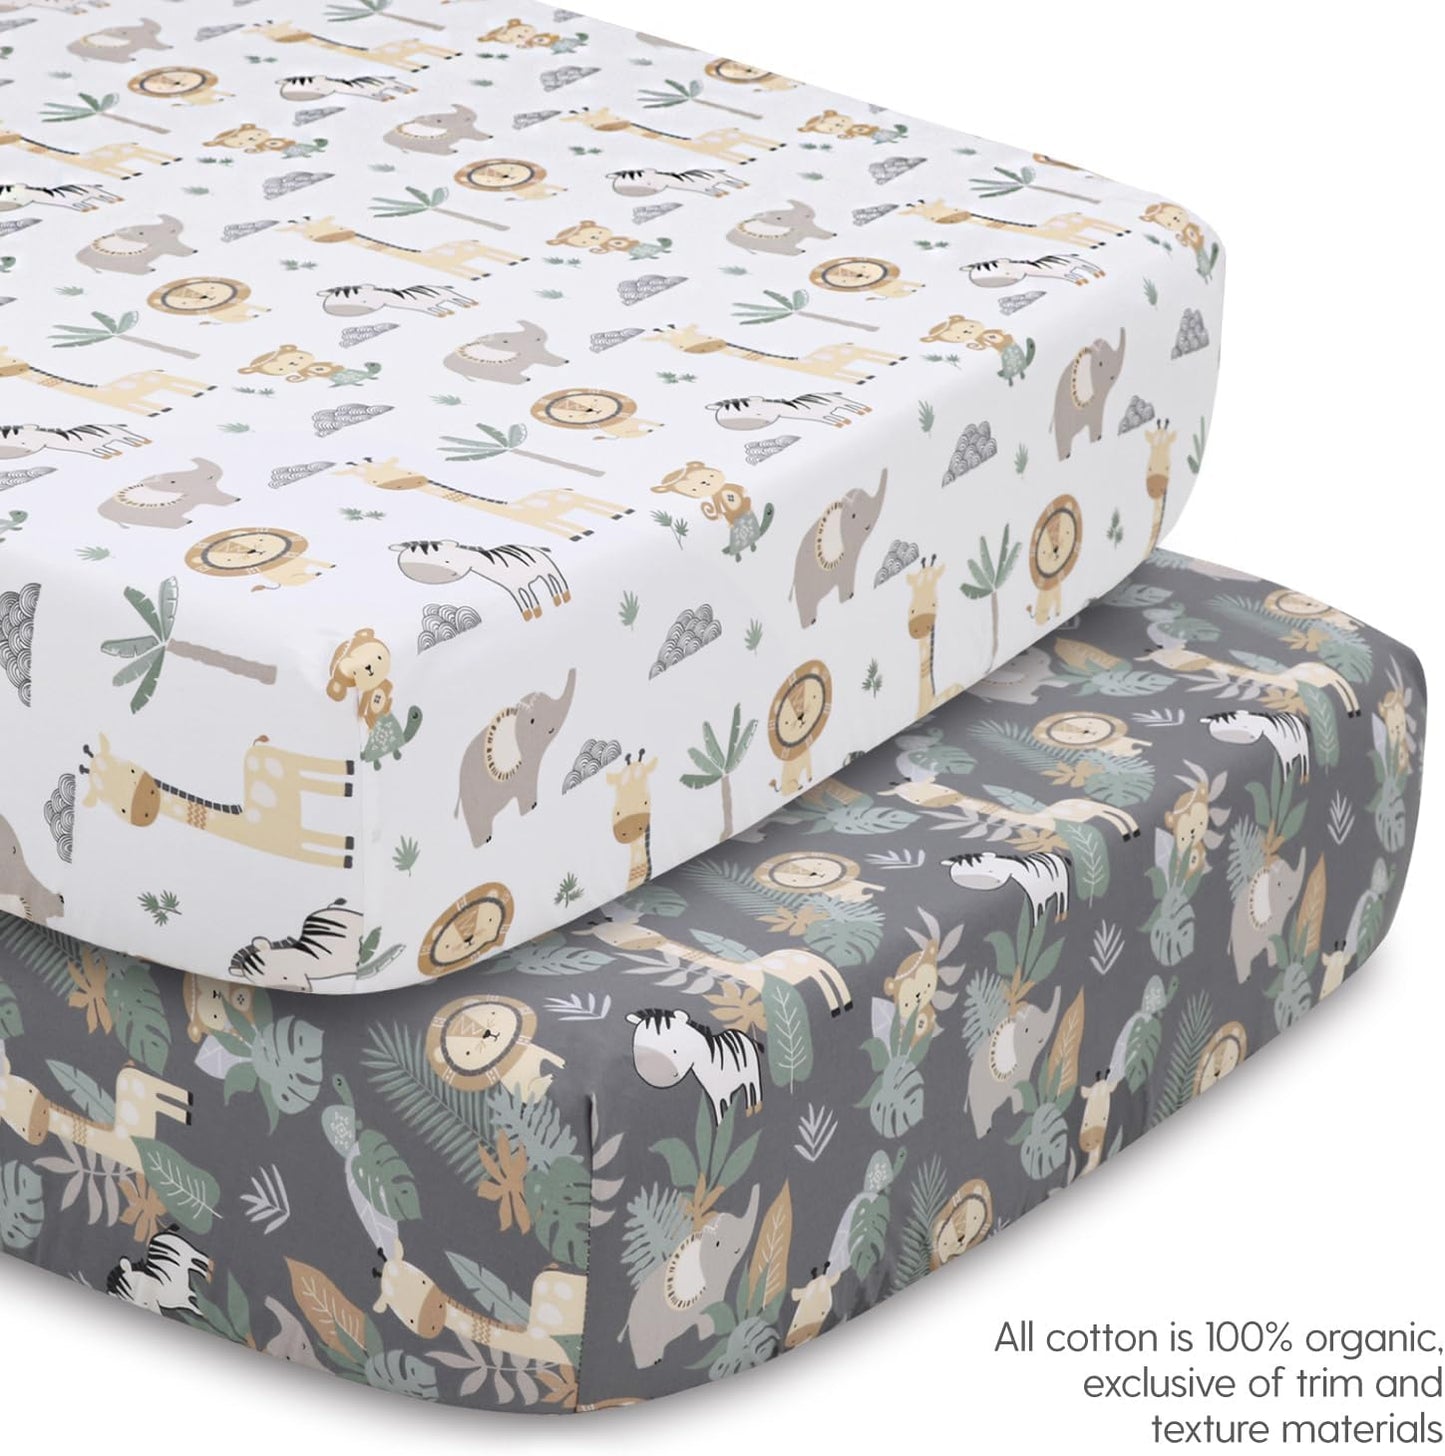 The Peanutshell Safari Crib Bedding Set for Boys or Girls, 4pc Organic Cotton Crib Comforter Set, Elephant Giraffe Monkey Zebra Nursery Decor, Neutral Grey, White, Tan, Green